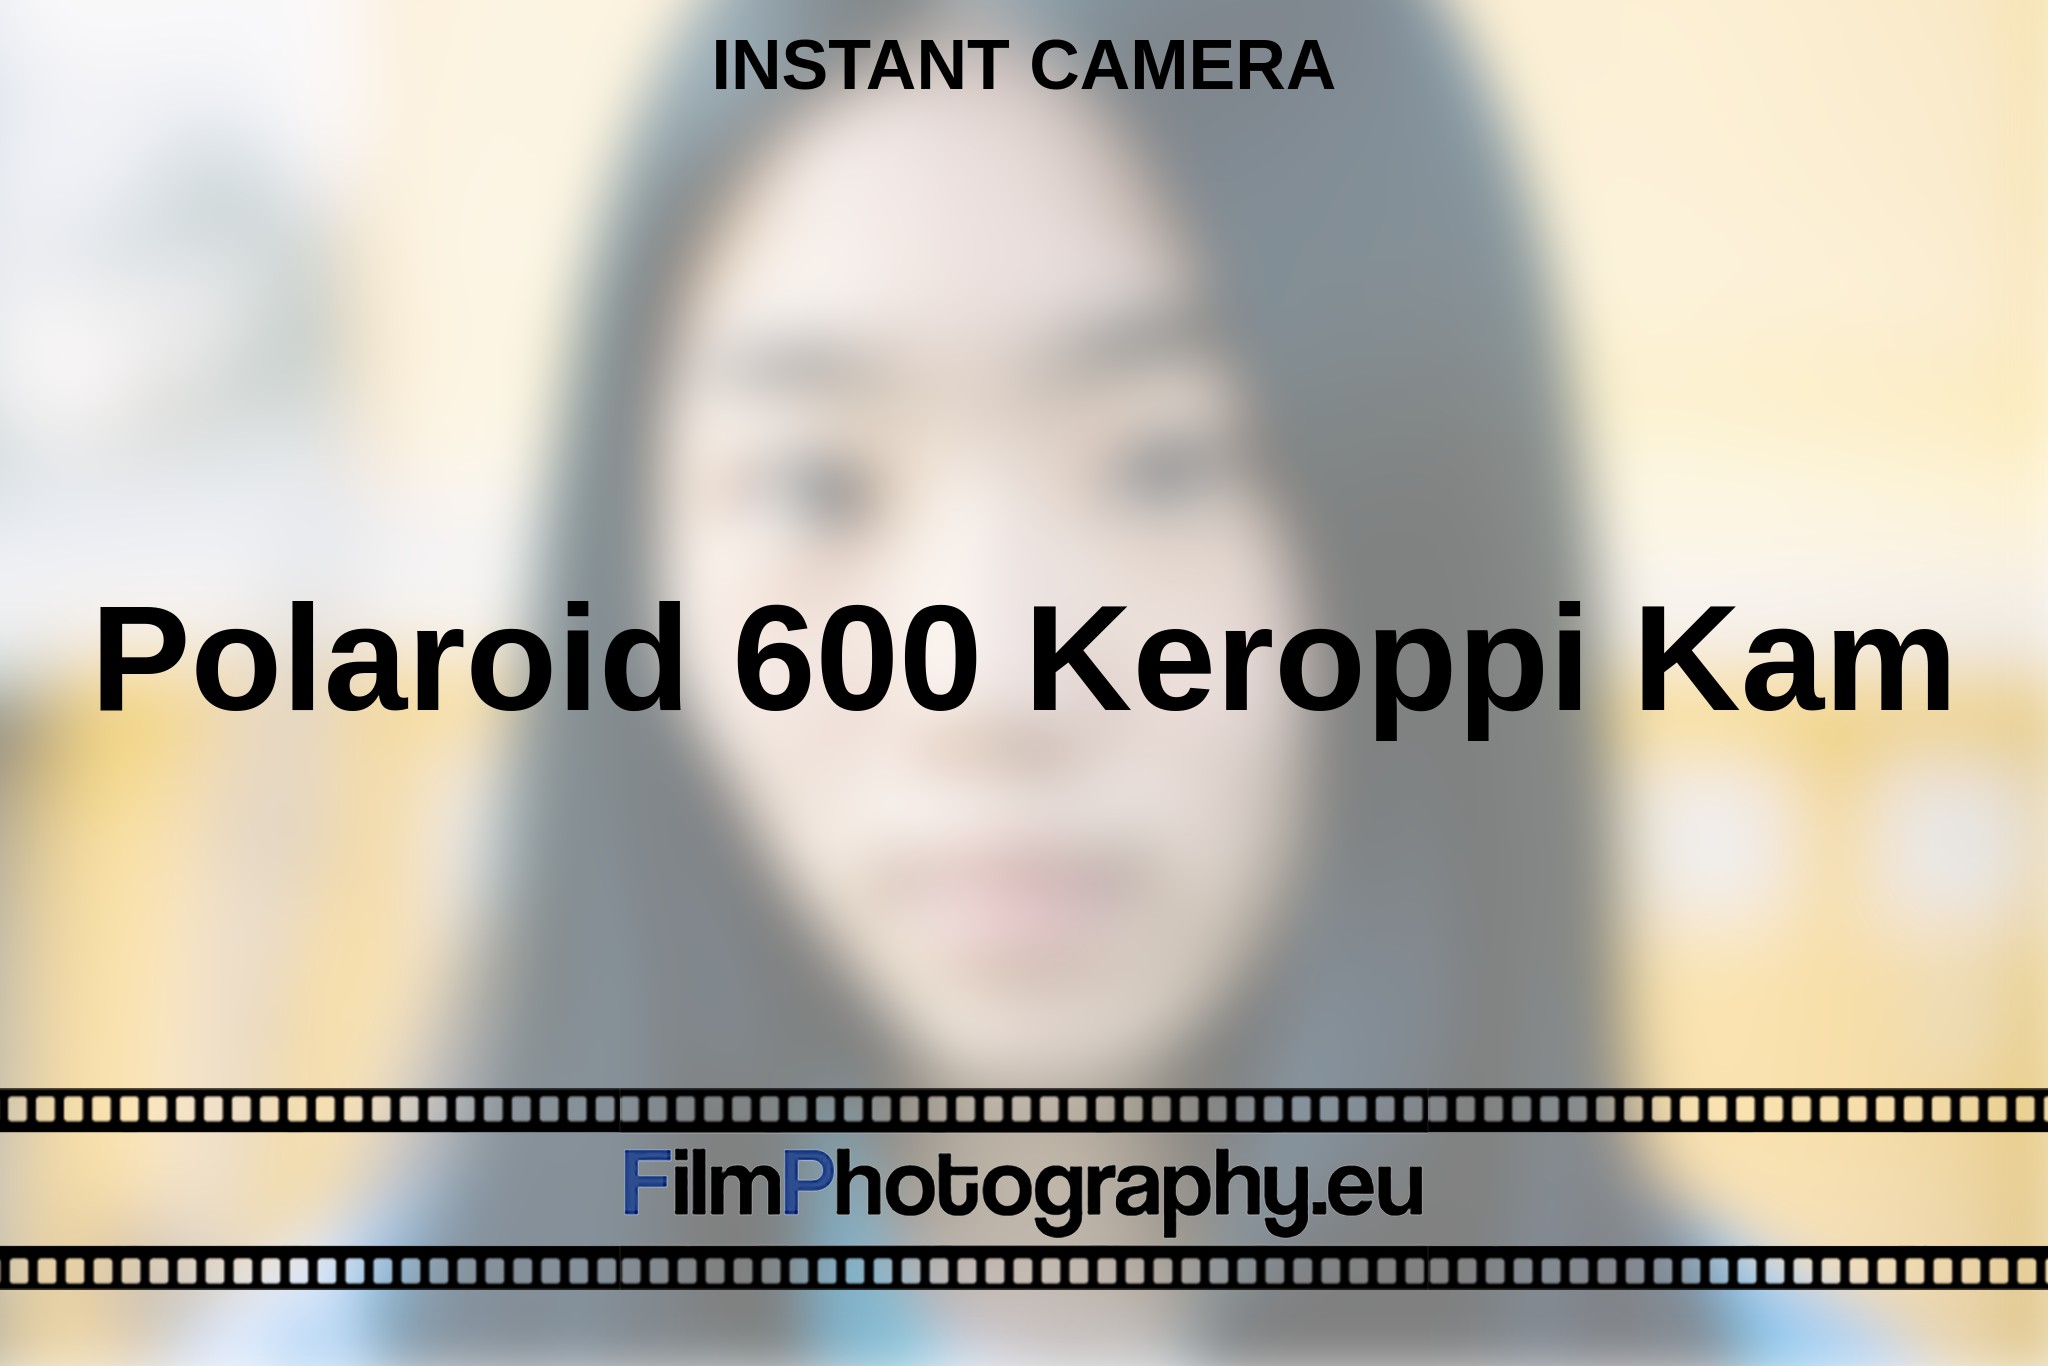 polaroid-600-keroppi-kam-instant-camera-bnv.jpg